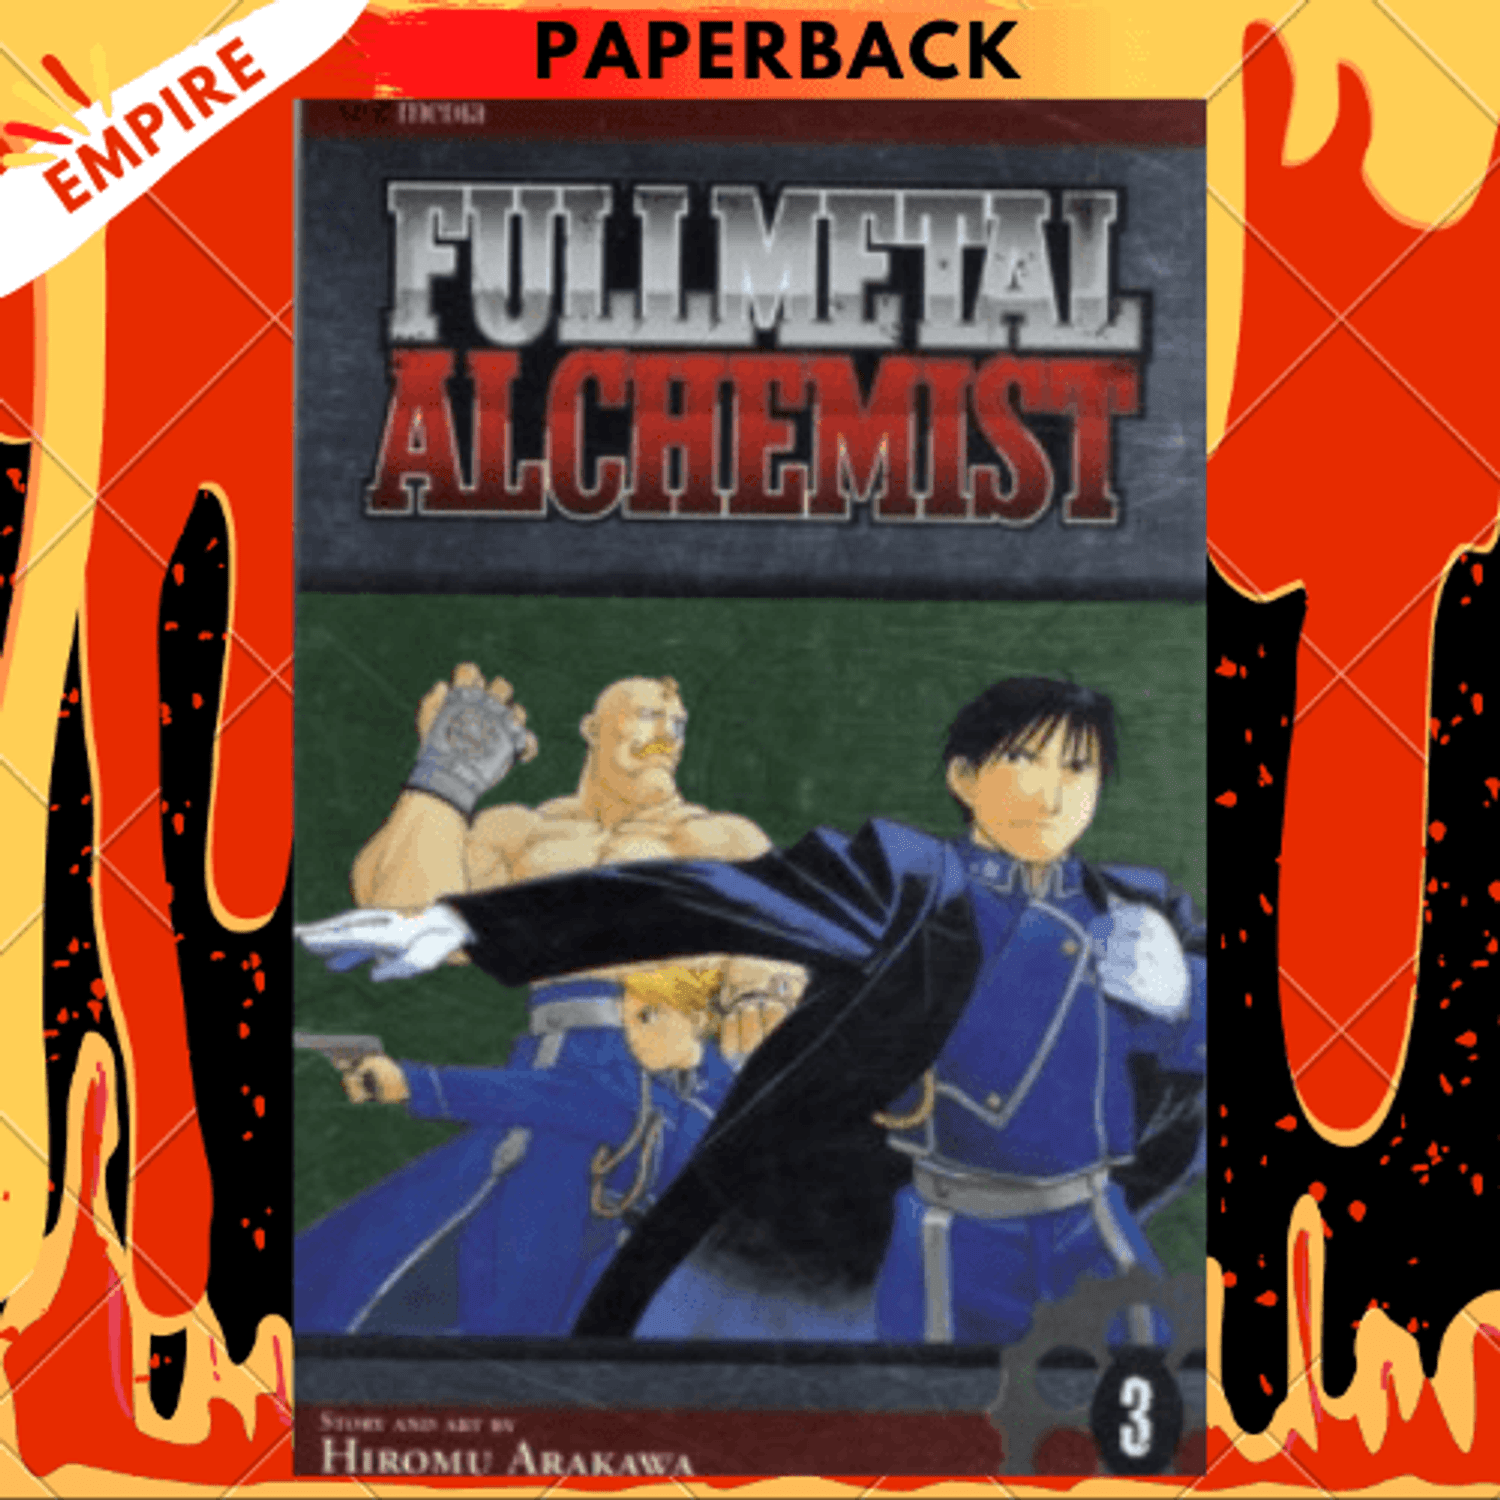 Fullmetal Alchemist (3-in-1 Edition), Vol. 4: Includes vols. 10